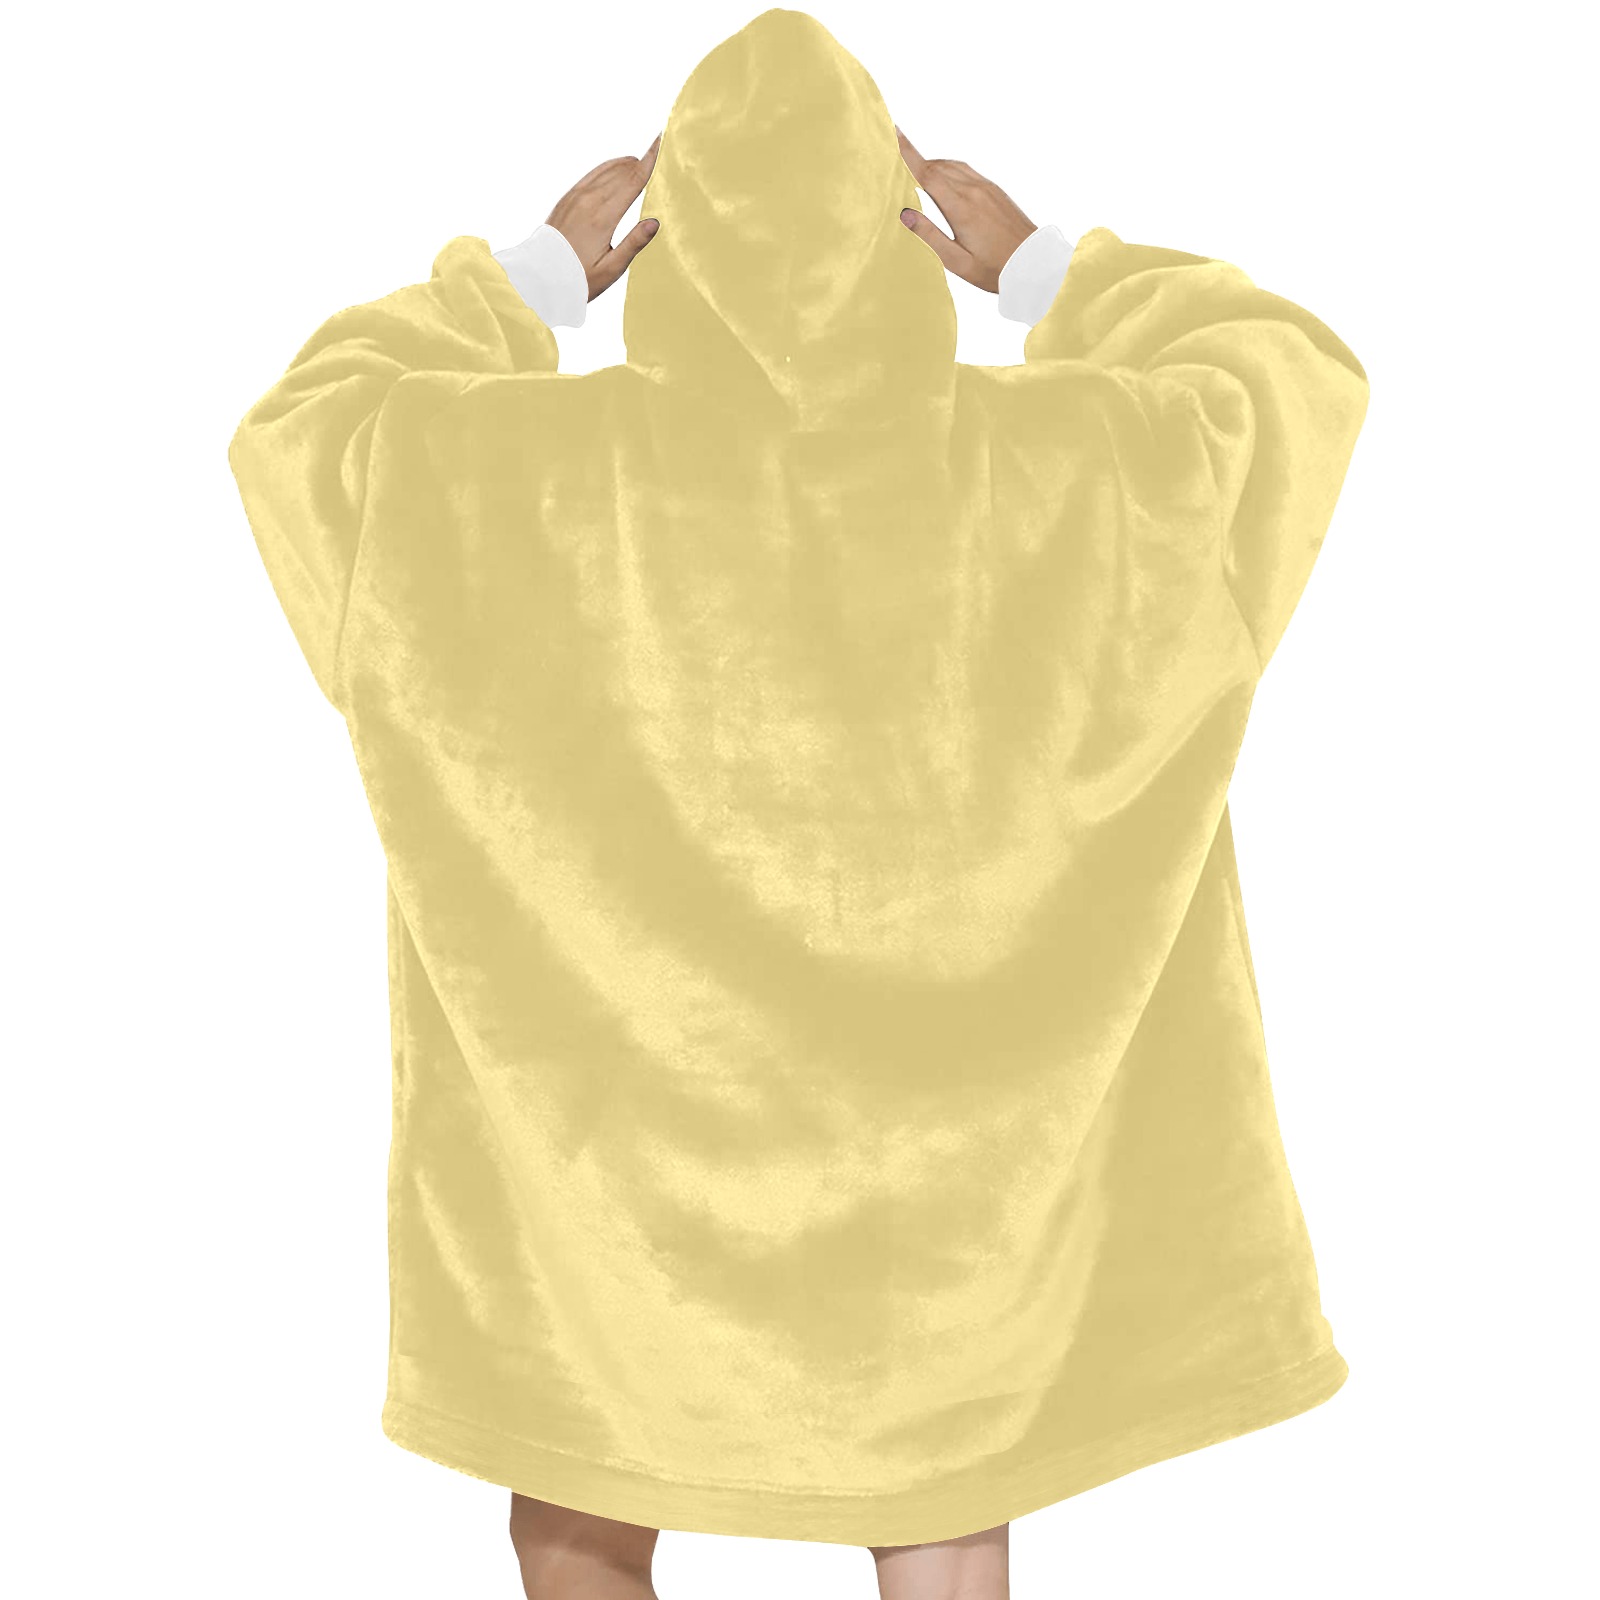 Popcorn Blanket Hoodie for Women